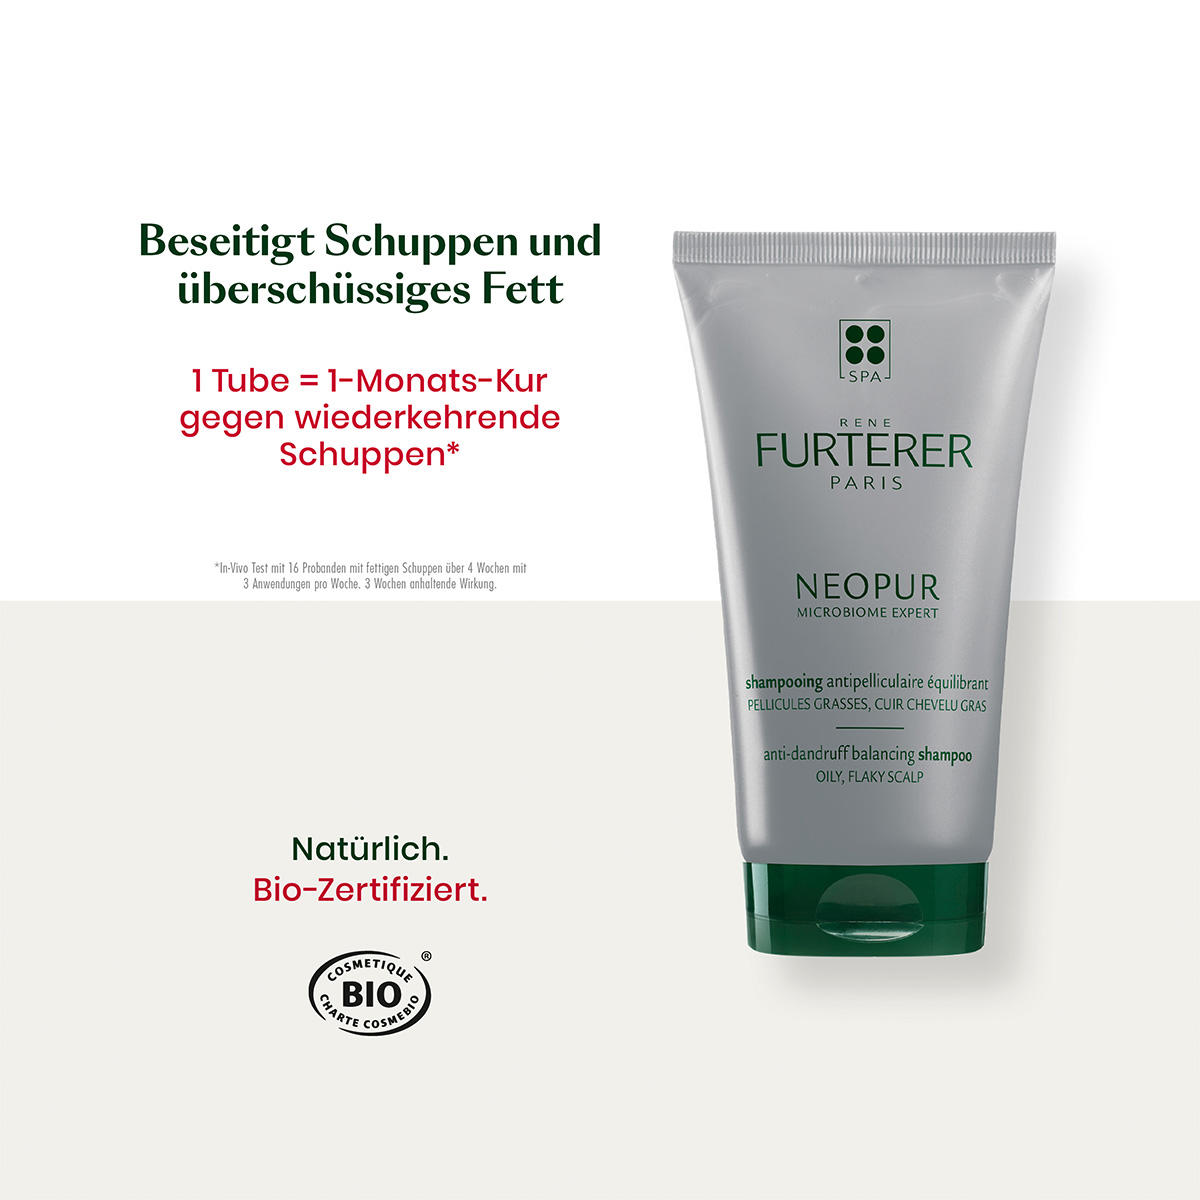 René Furterer Neopur Shampoo antiforfora equilibrante per cuoio capelluto grasso 150 ml - 7